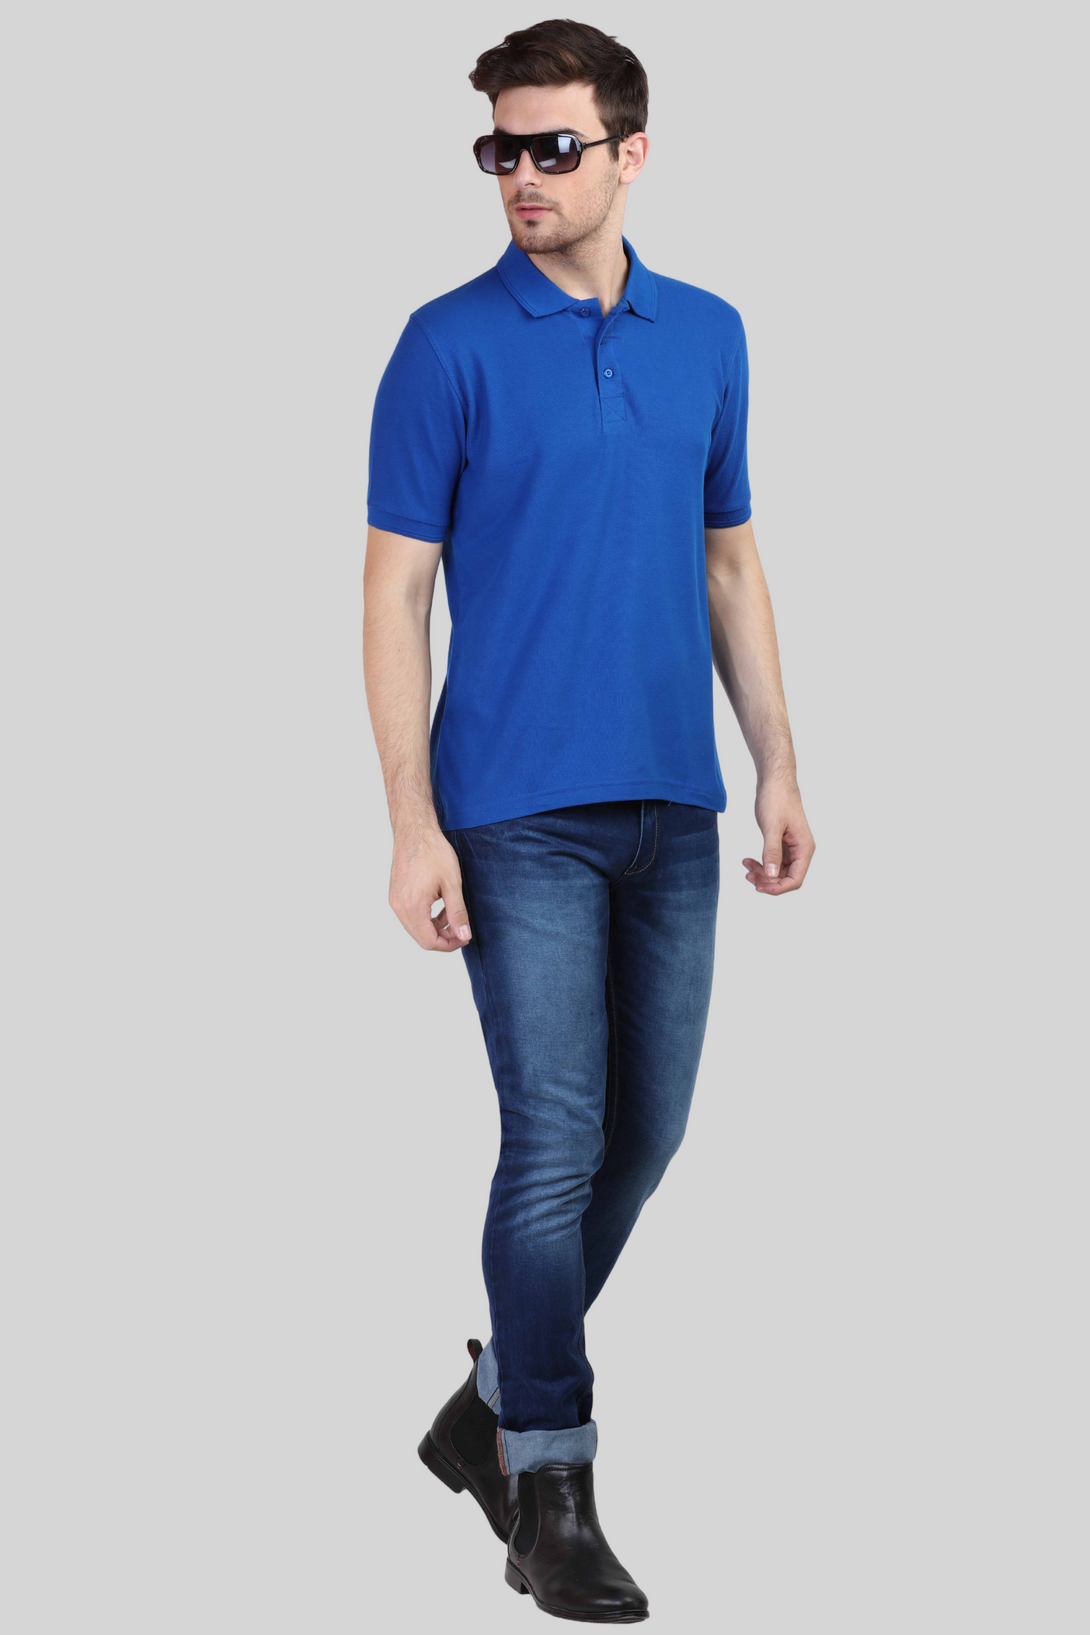 Royal Blue Polo T-Shirt For Men - WowWaves - 7